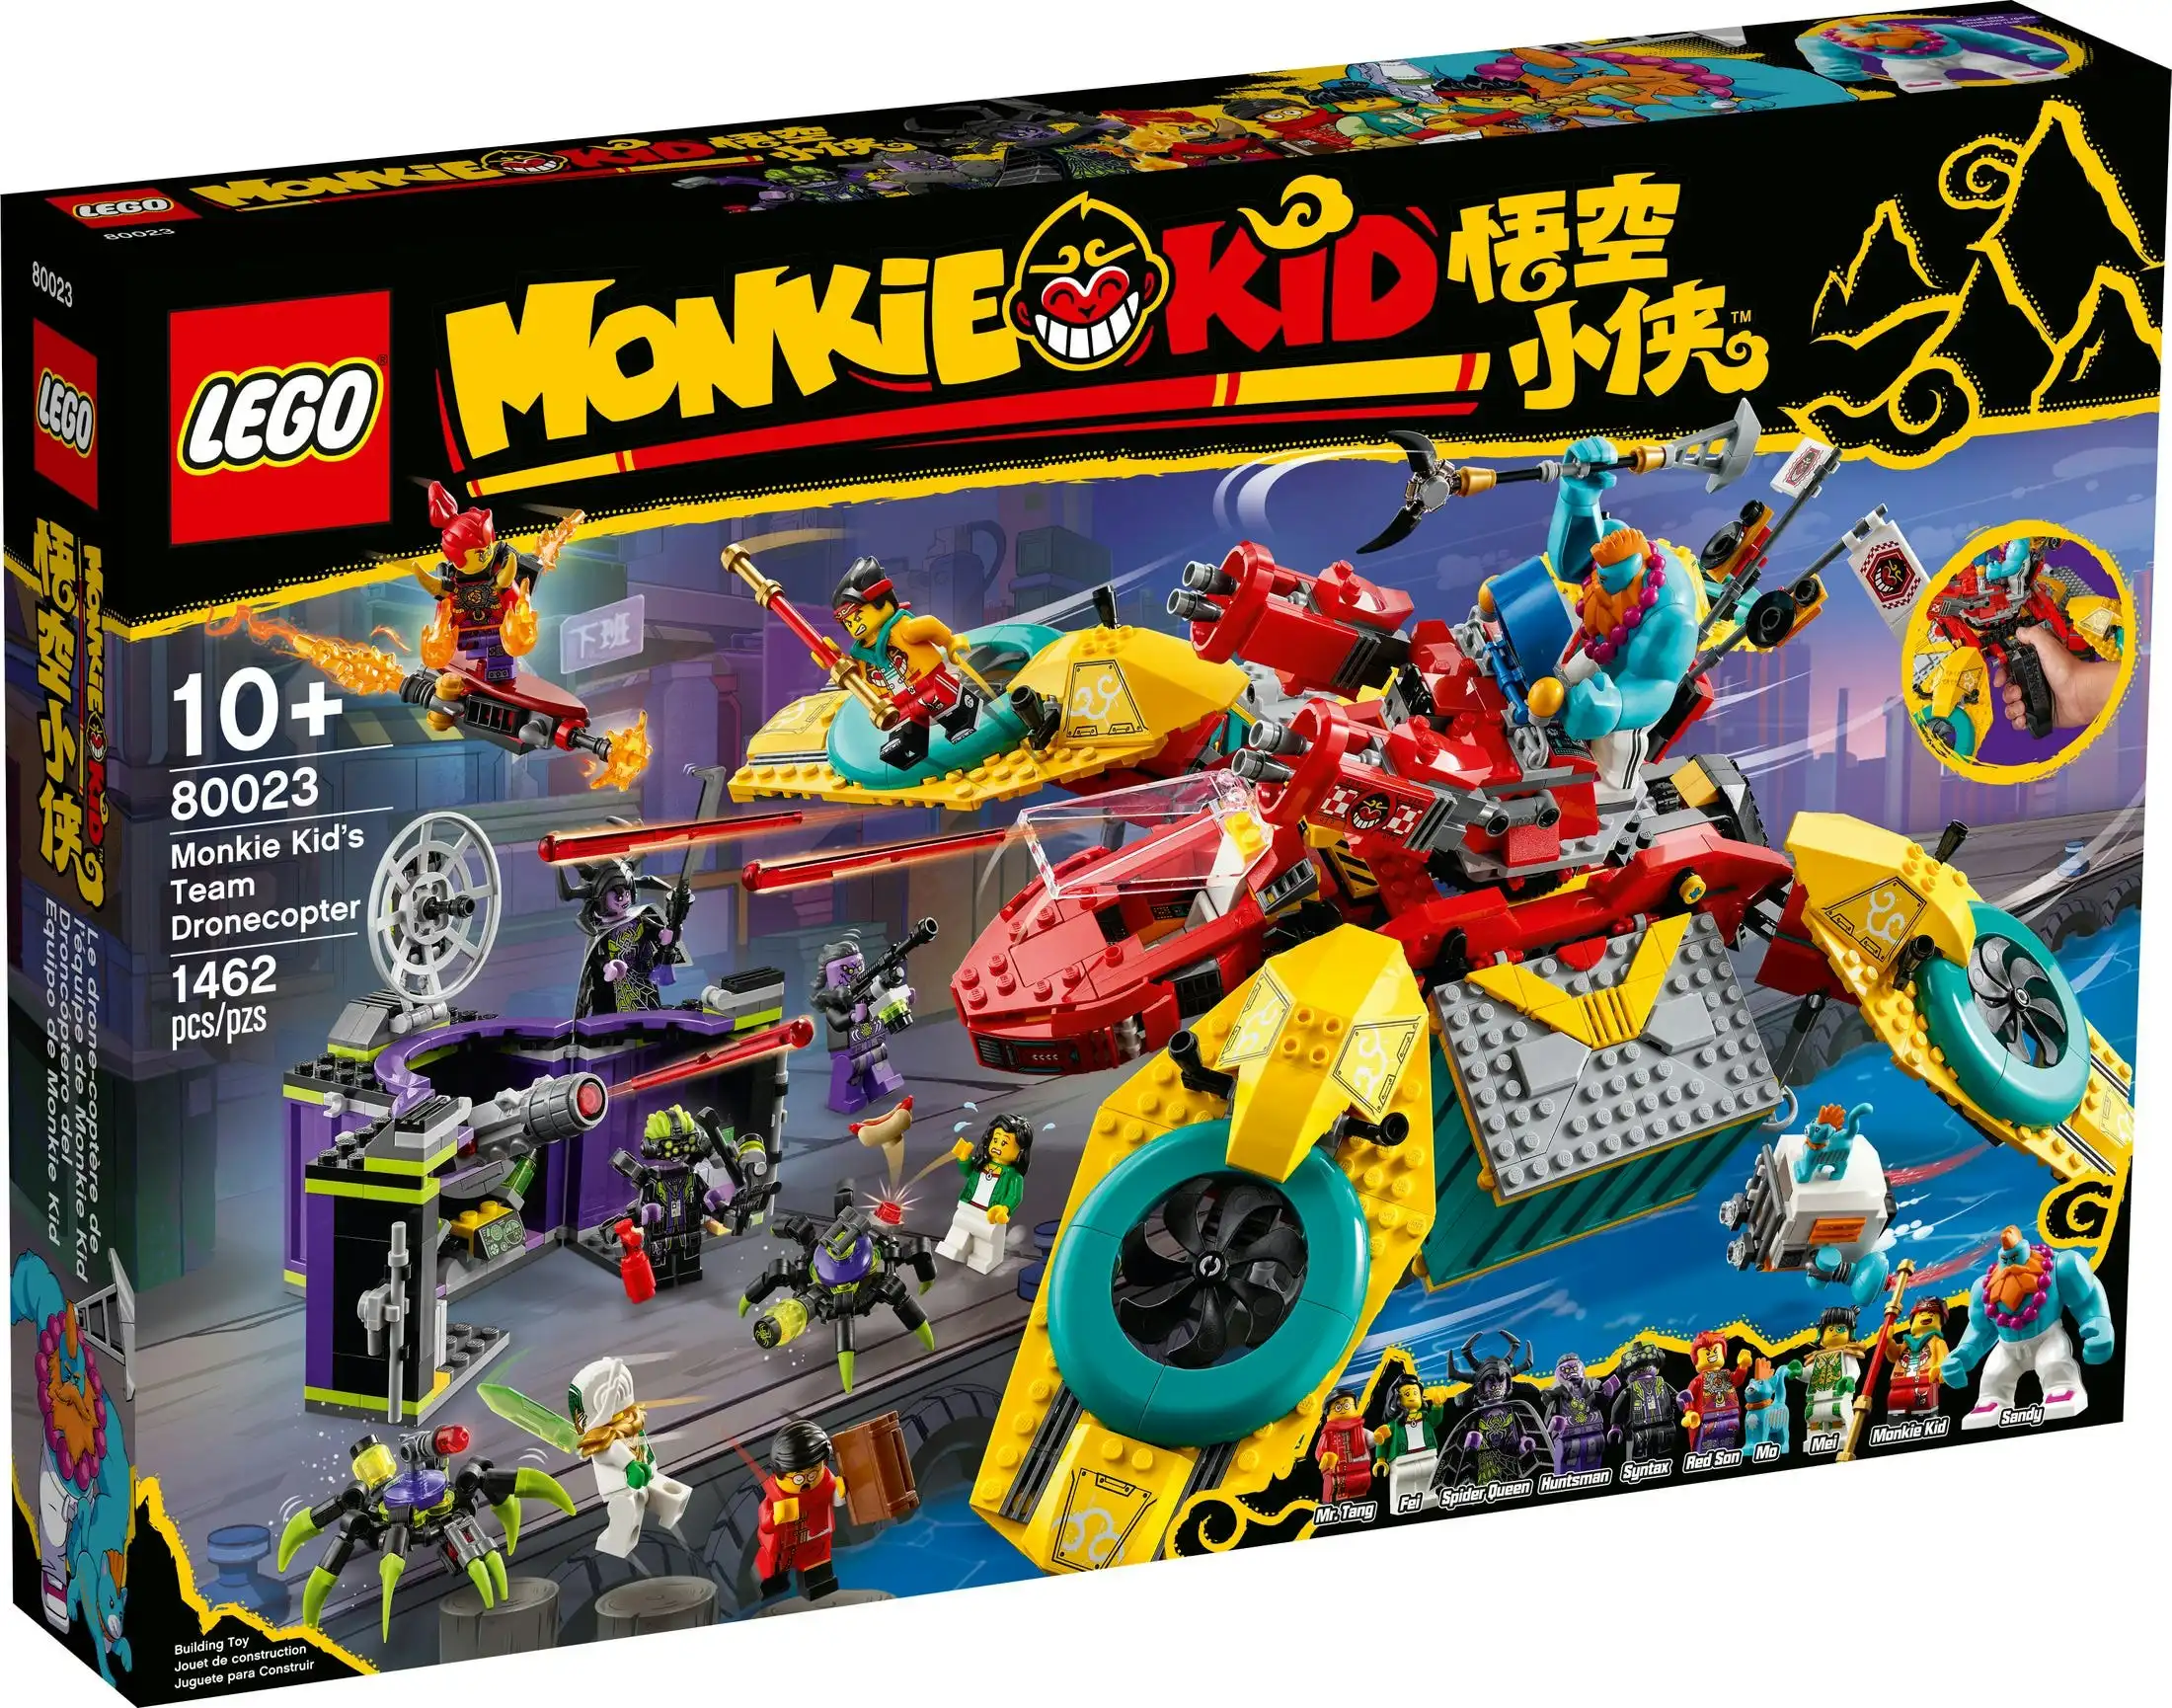 LEGO 80023 Monkie Kid's Team Dronecopter - Monkie Kid